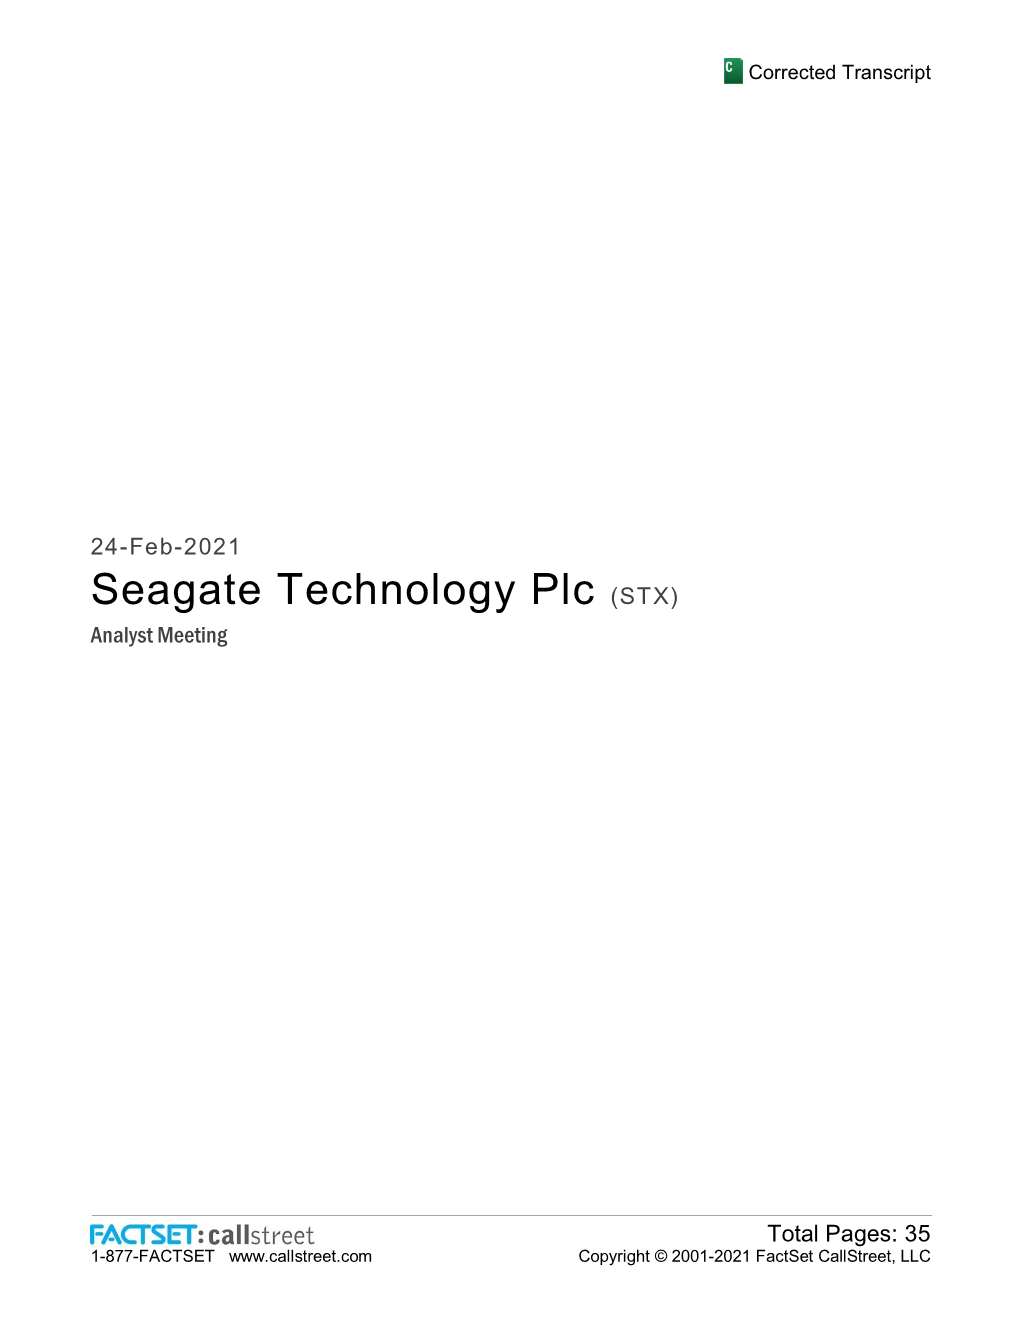 Seagate Technology Plc (STX) Analyst Meeting